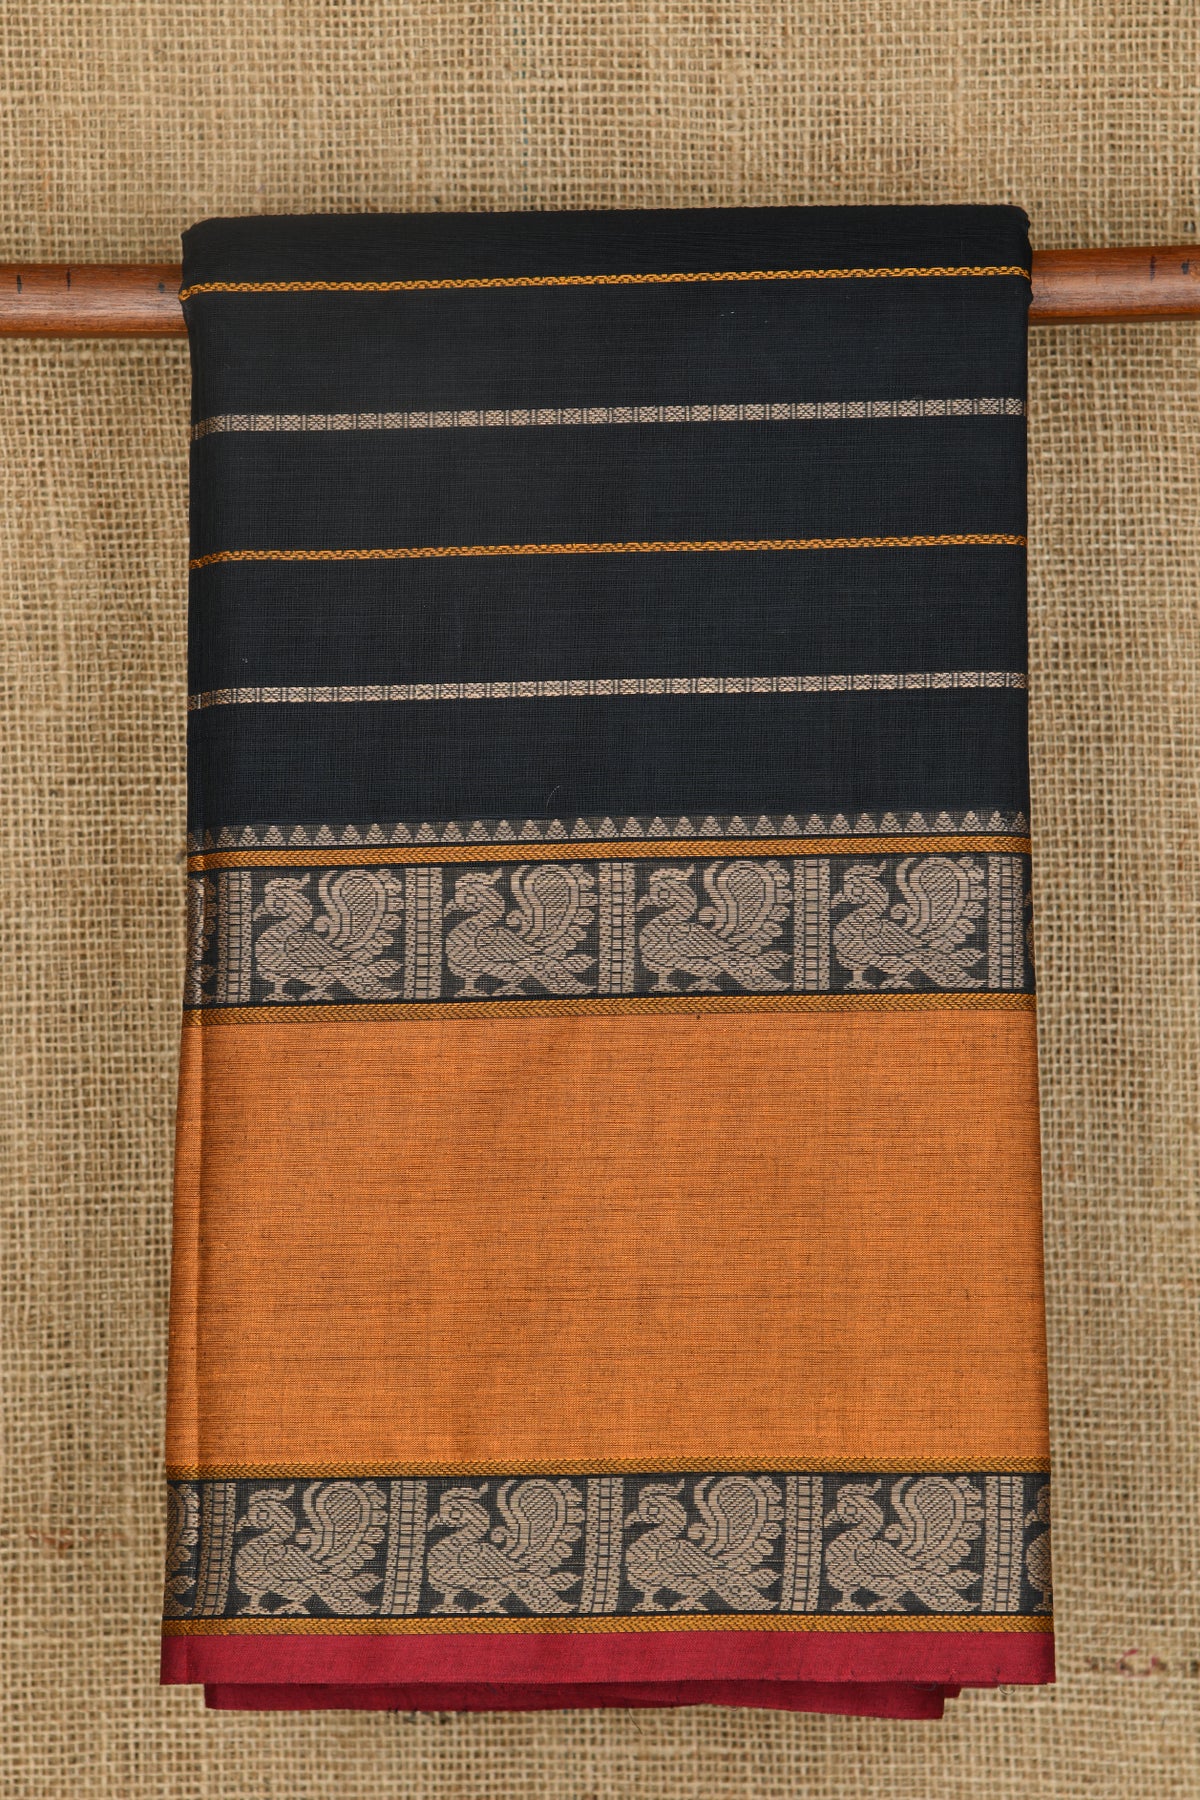 Traditional Thread Work Peacock Border With Stripes Body Black Coimbatore Cotton Saree